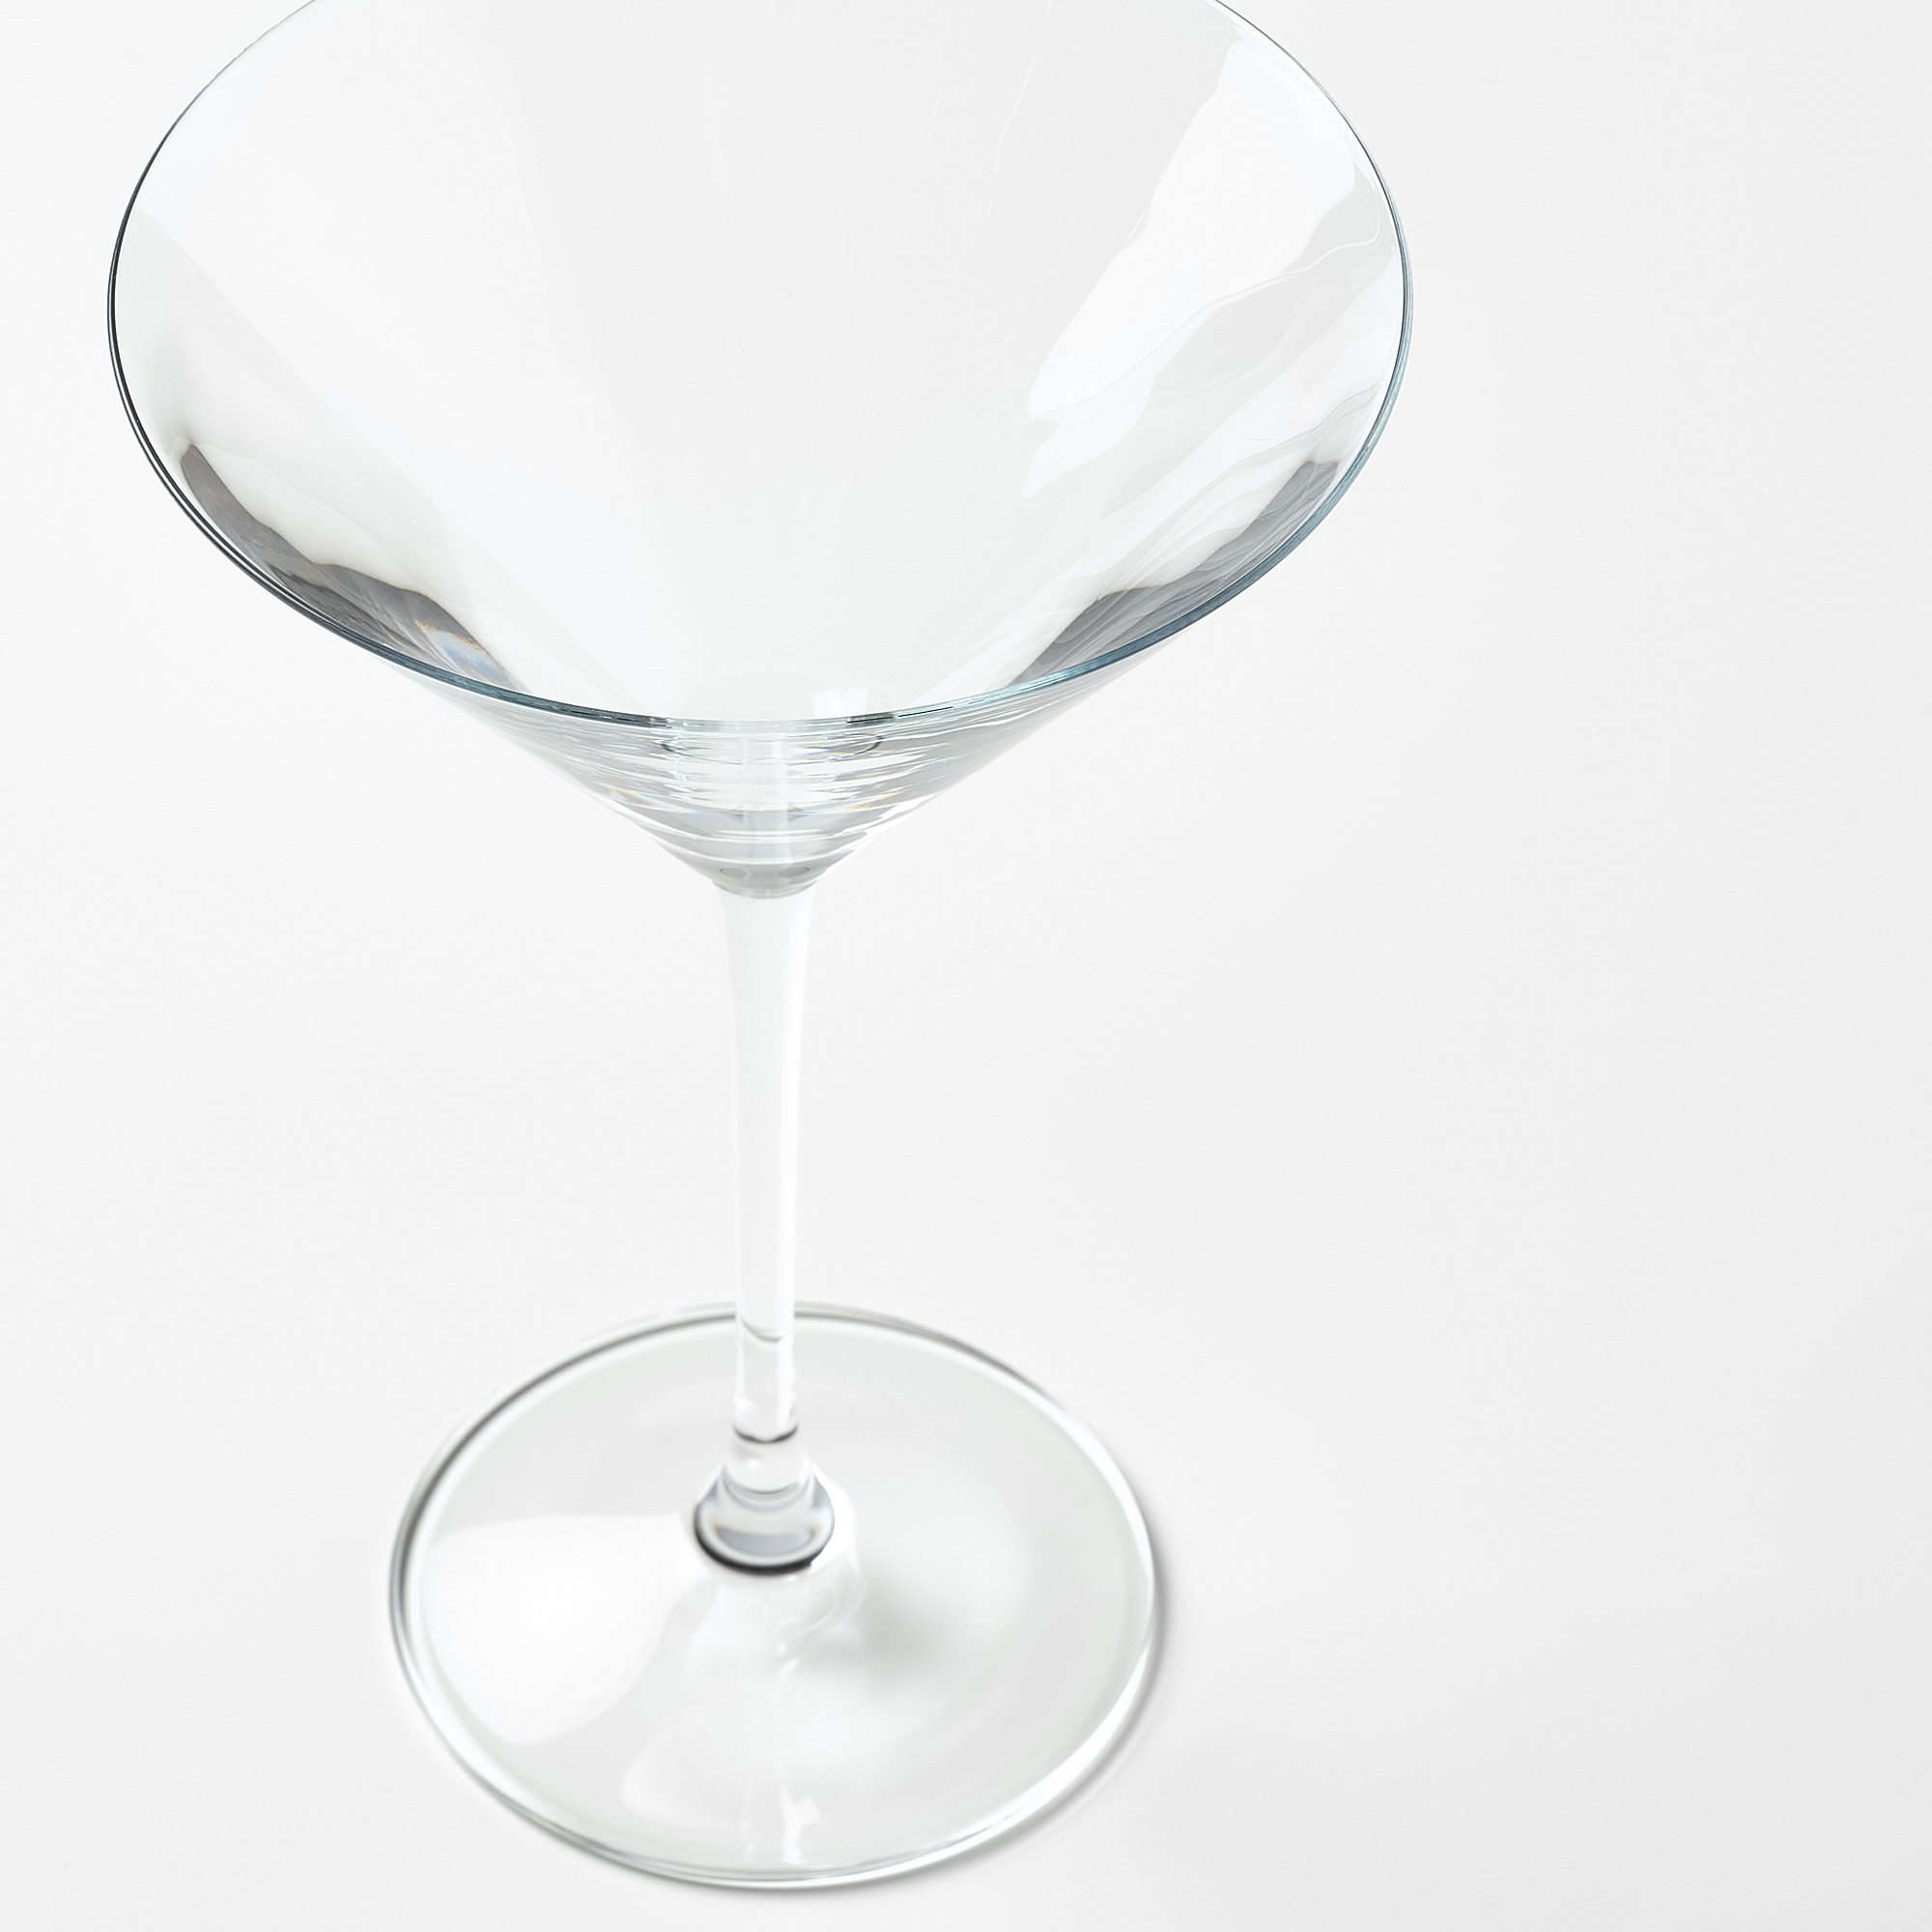 STORSINT martini glass